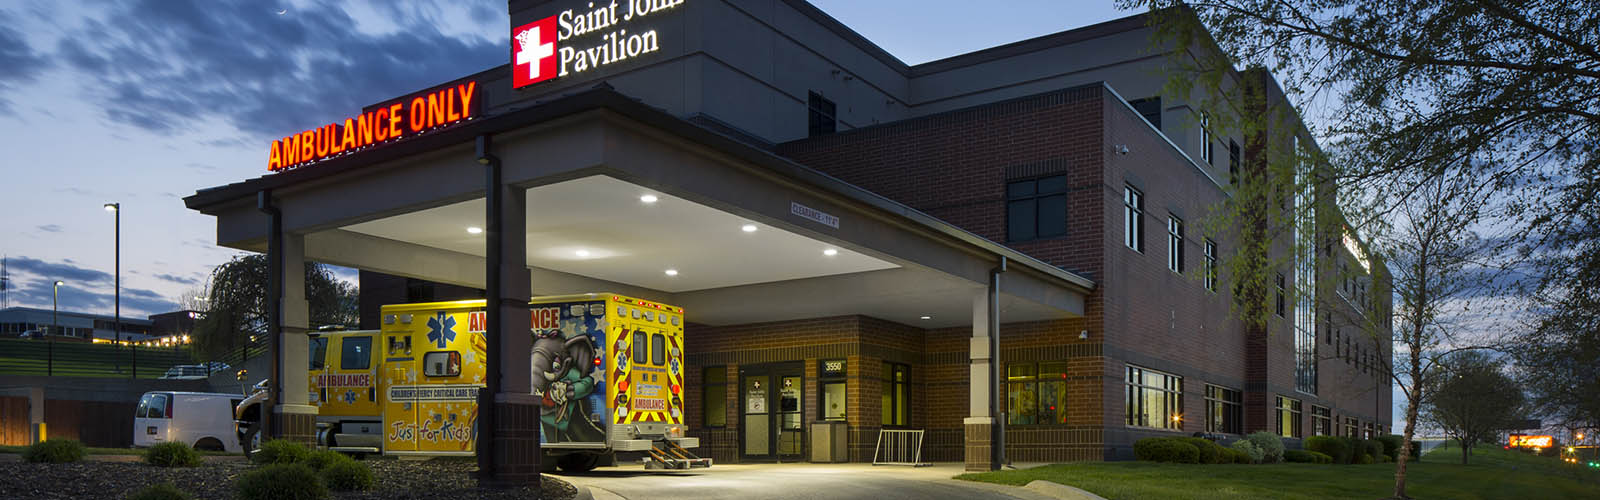 Saint John Urgent Care - Leavenworth, KS